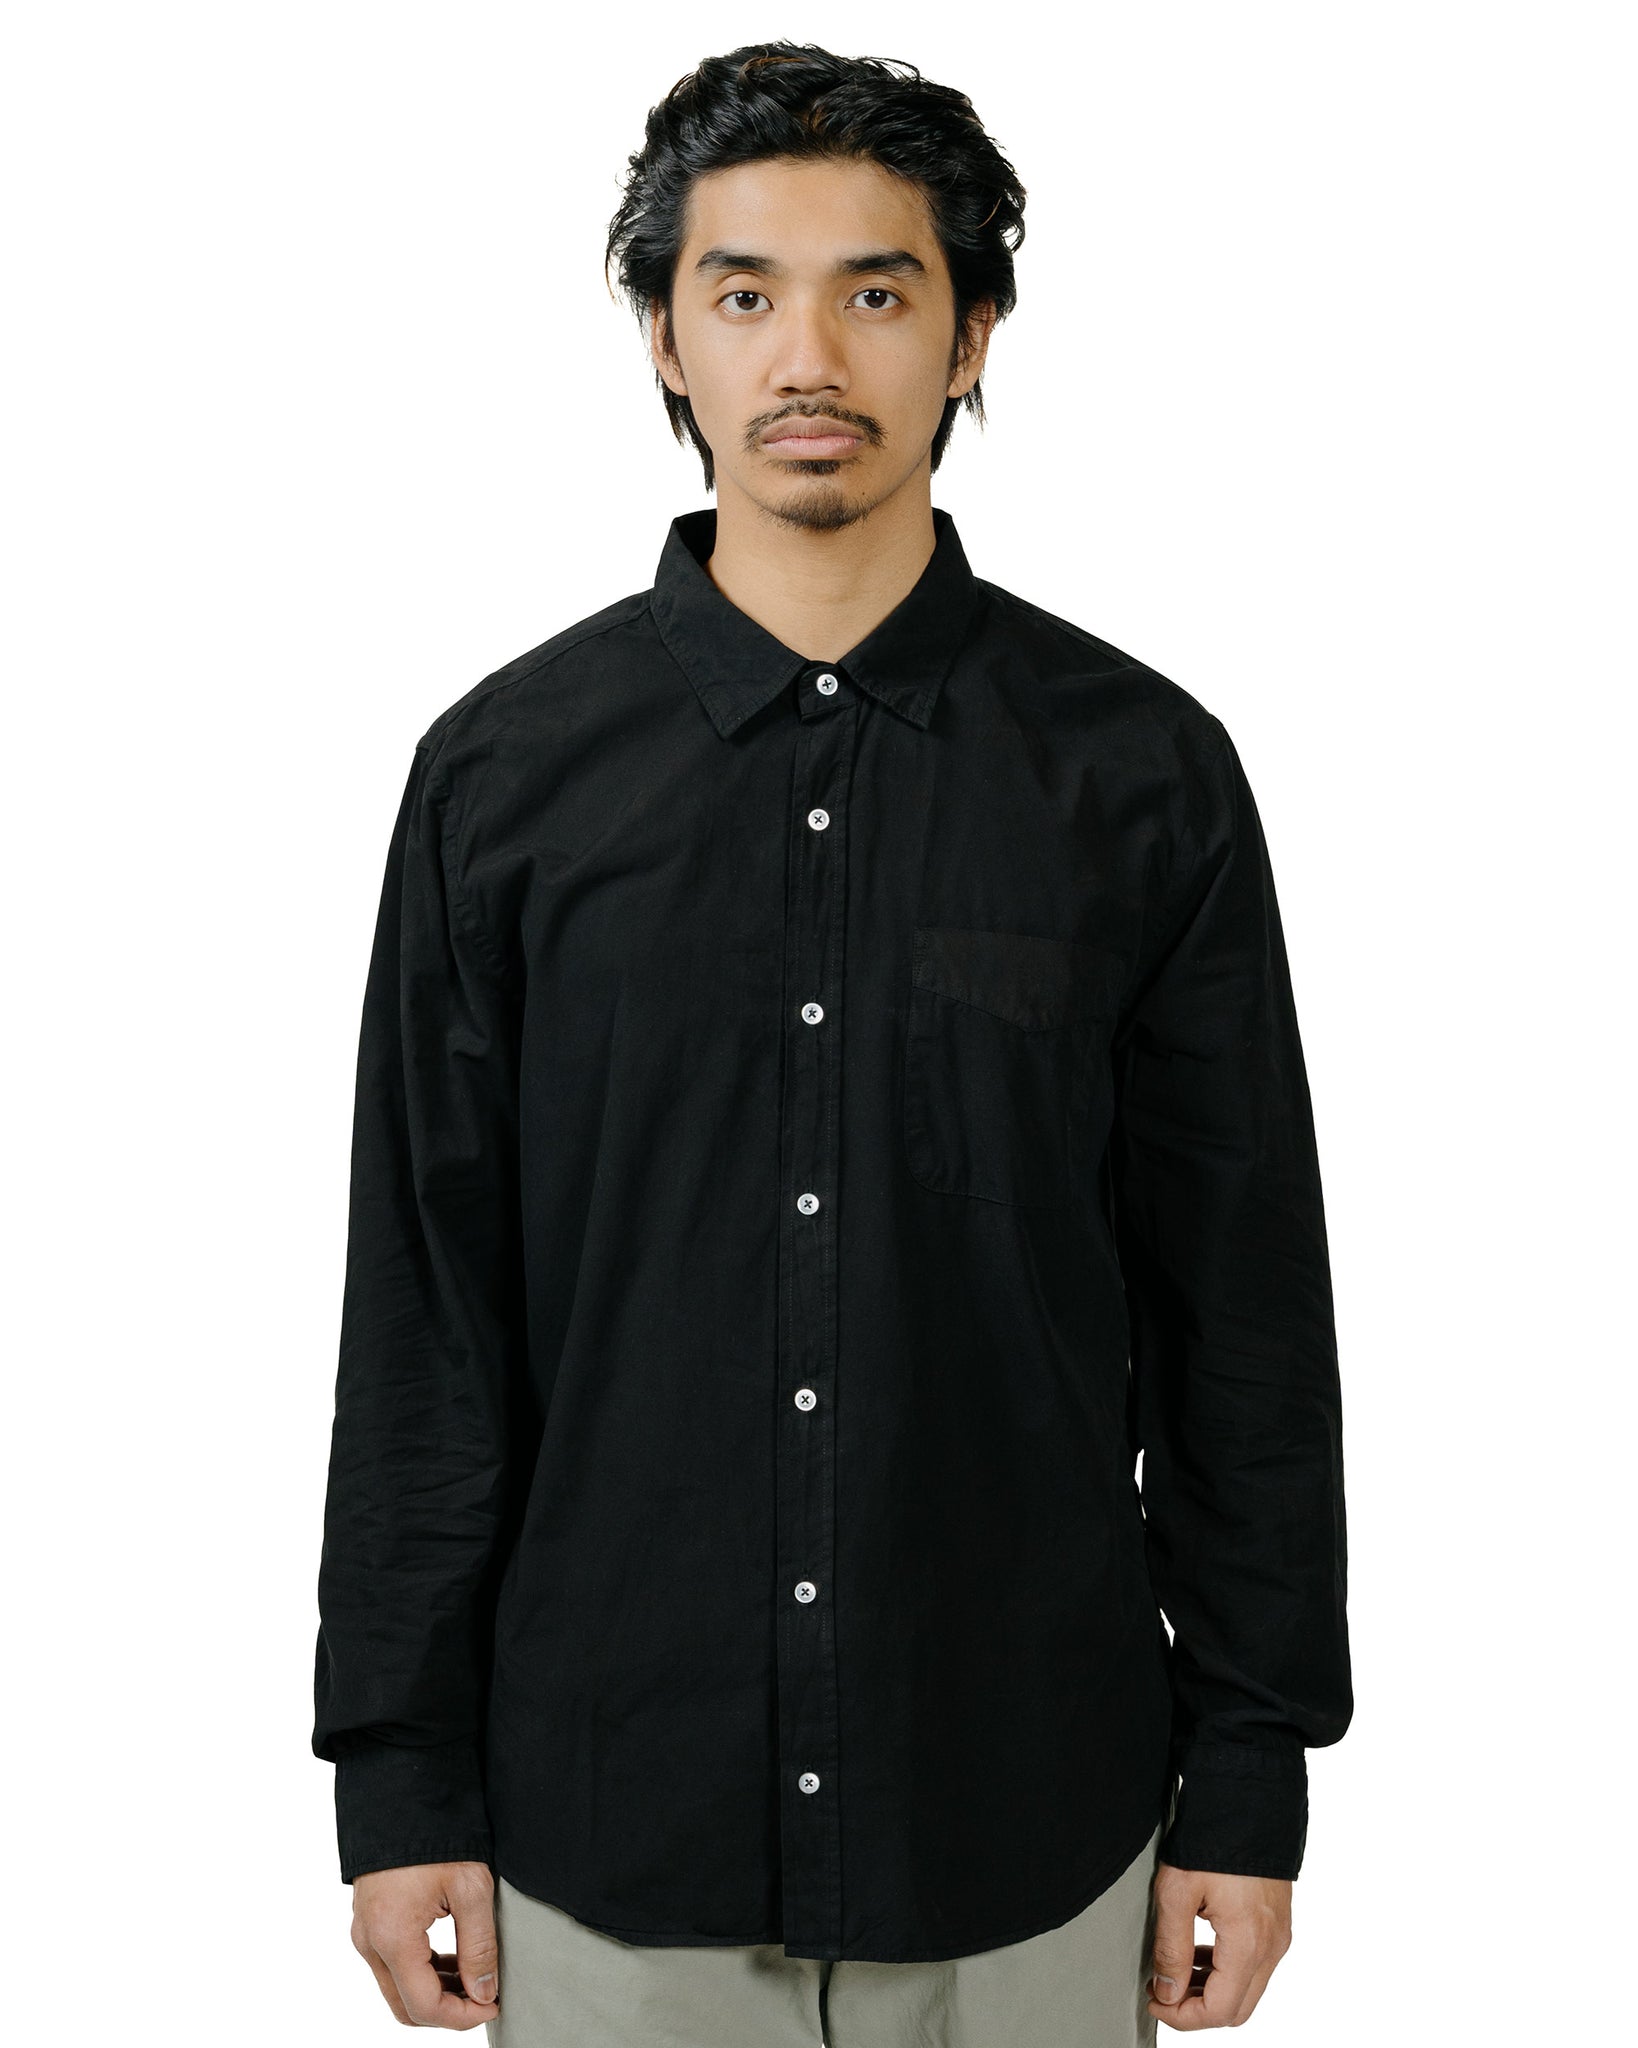 Save Khaki United Poplin Standard Shirt Black model front